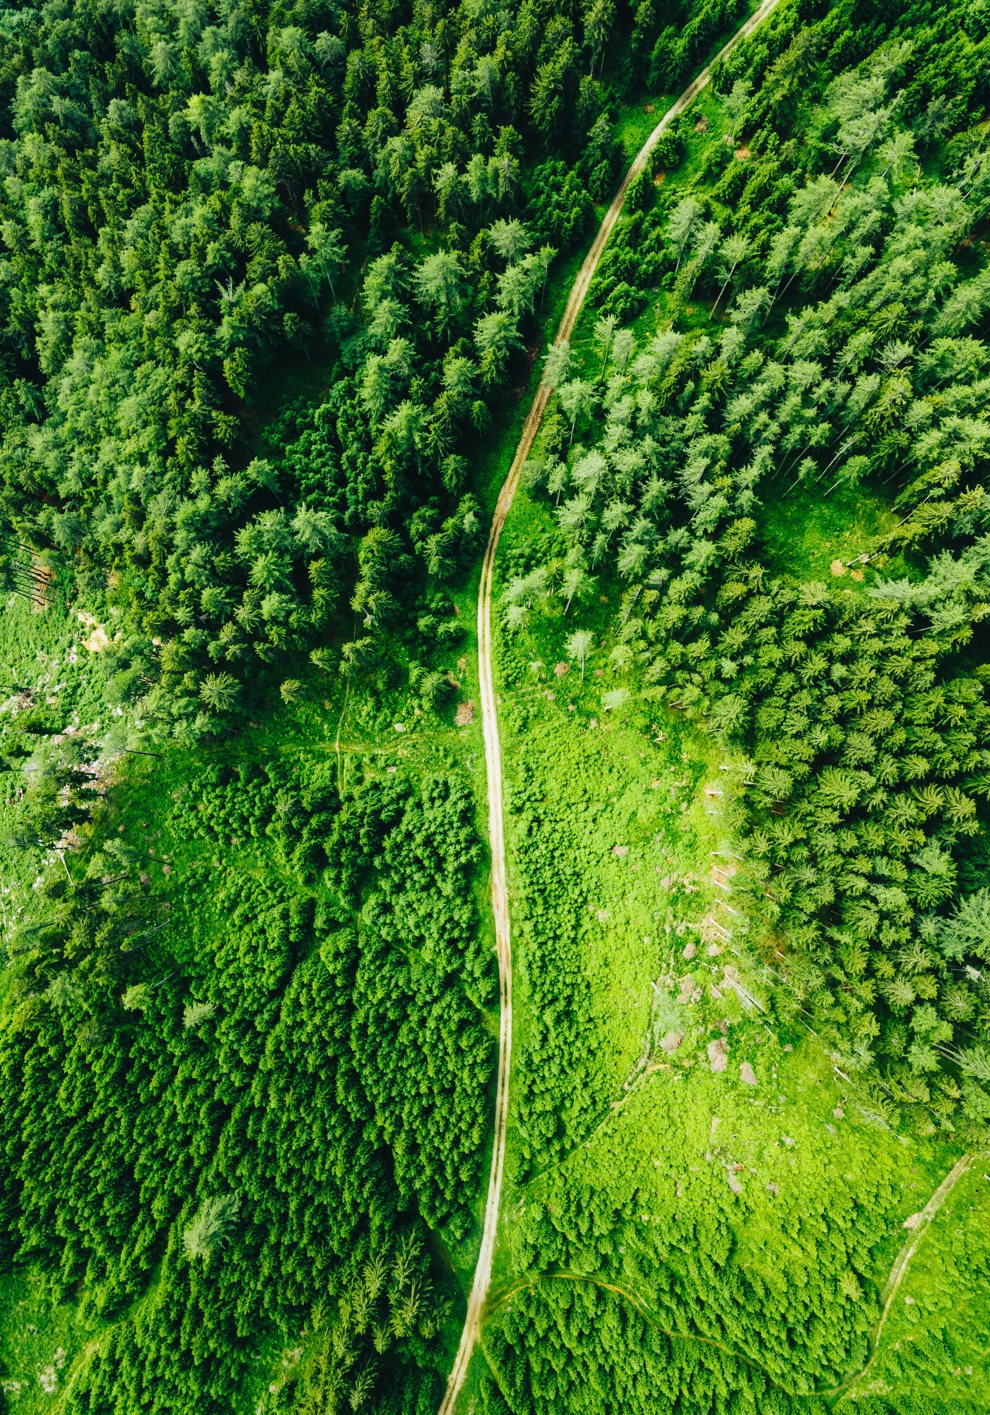 The value of global forest restoration